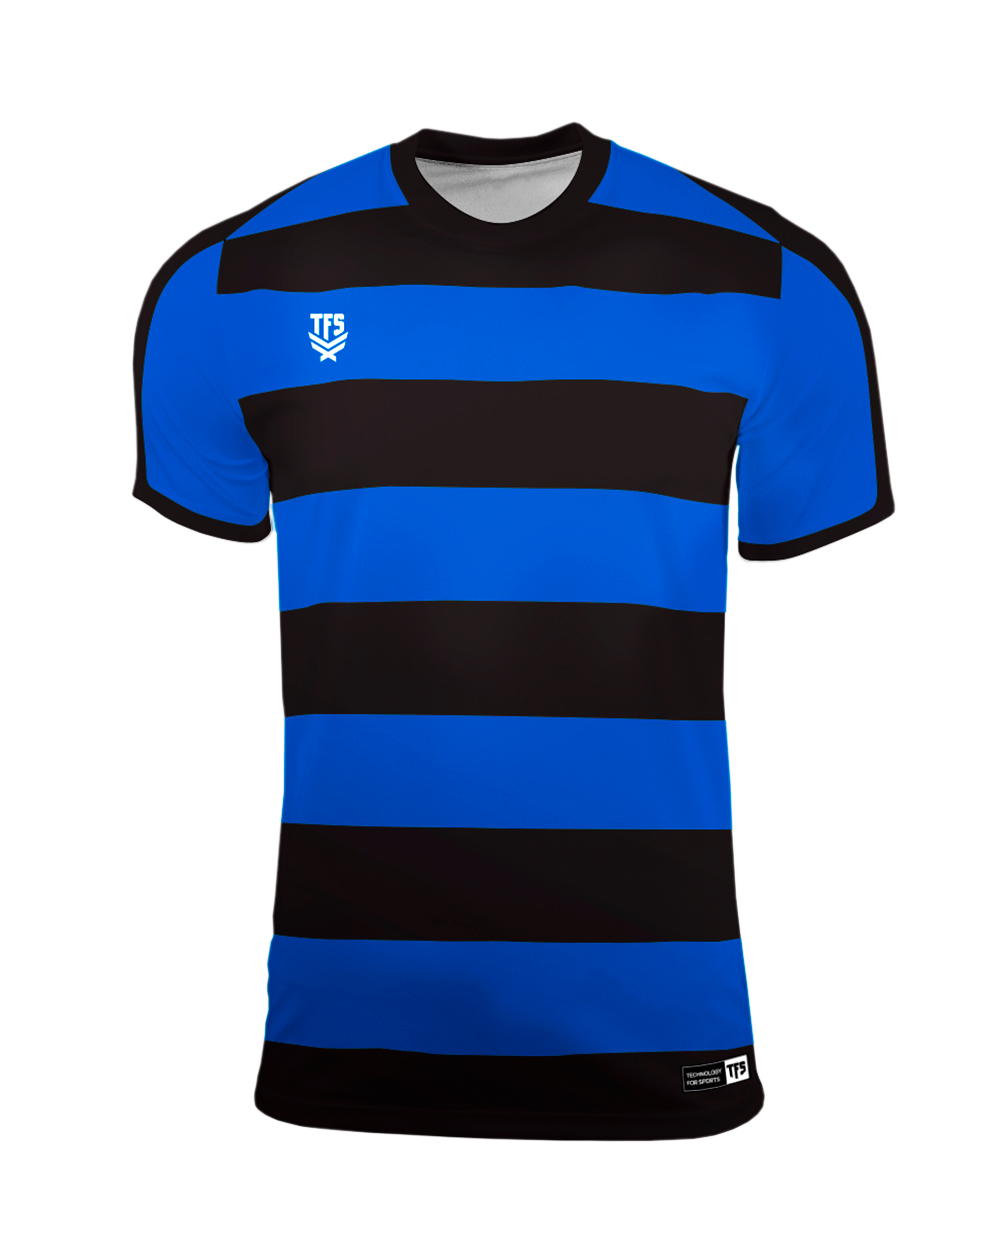 Camiseta Niños Futbol TFS Francia - - Camisetas